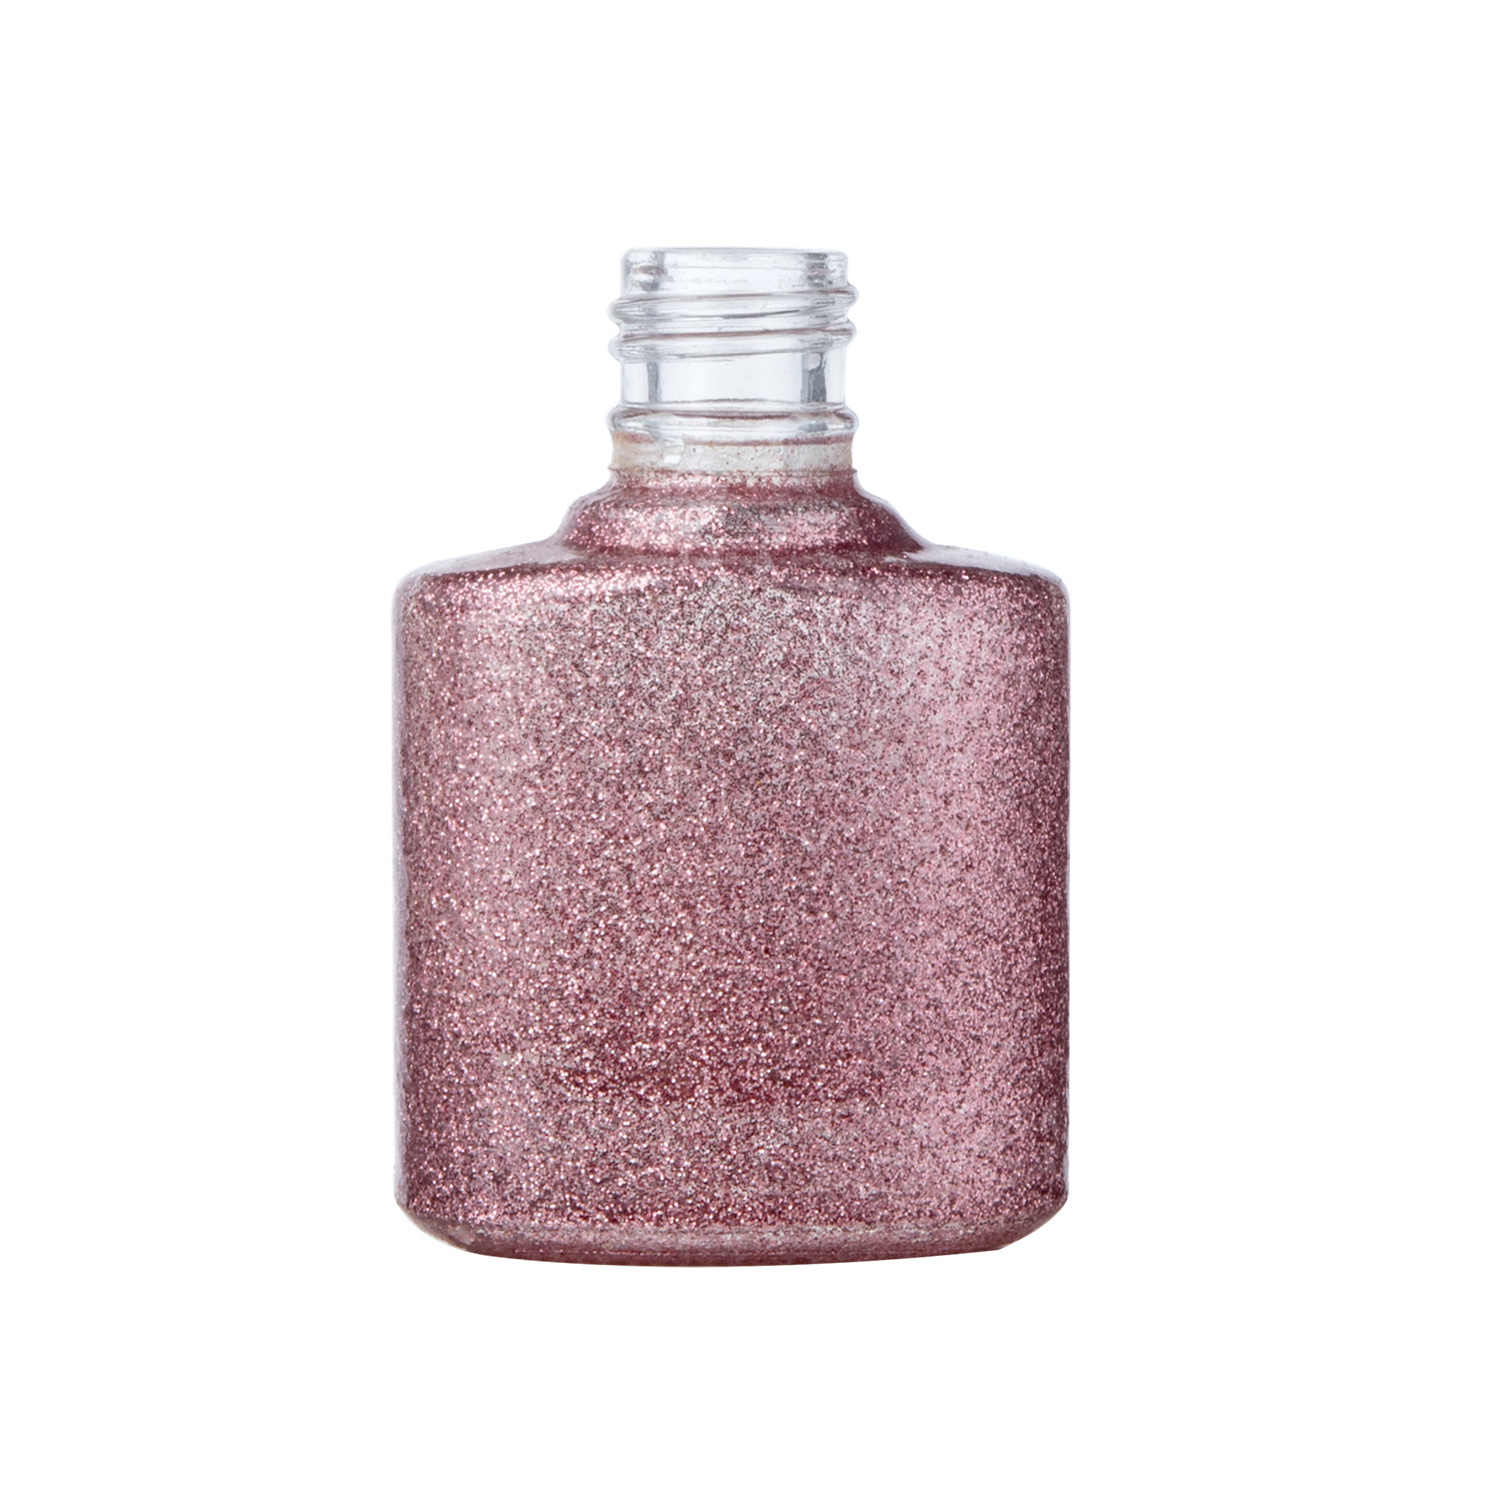 8ml Glitter Oval Shape Nail Polish Glass Bottle with water drop cap